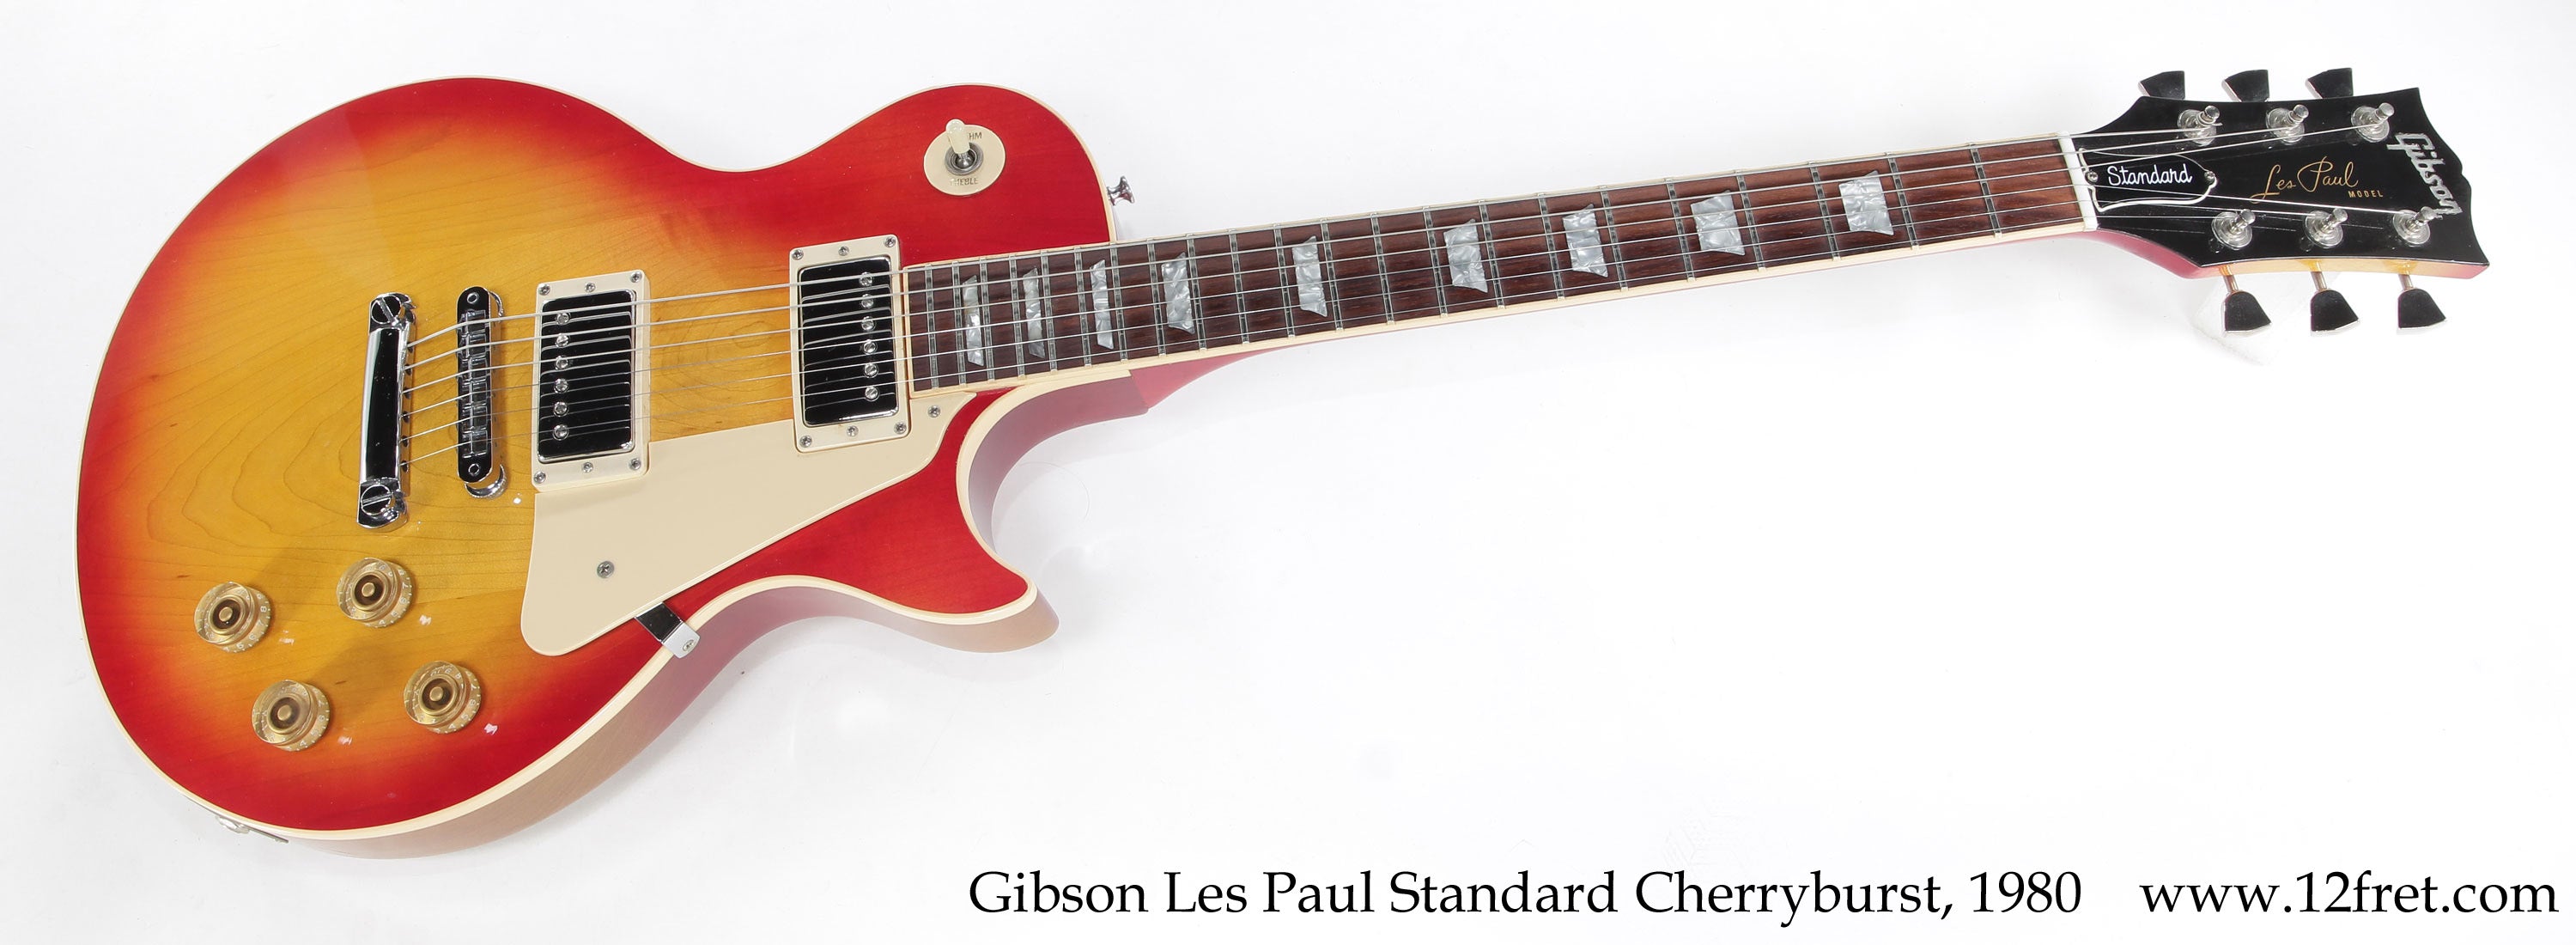 Gibson Les Paul Standard Cherryburst, 1980  - The Twelfth Fret